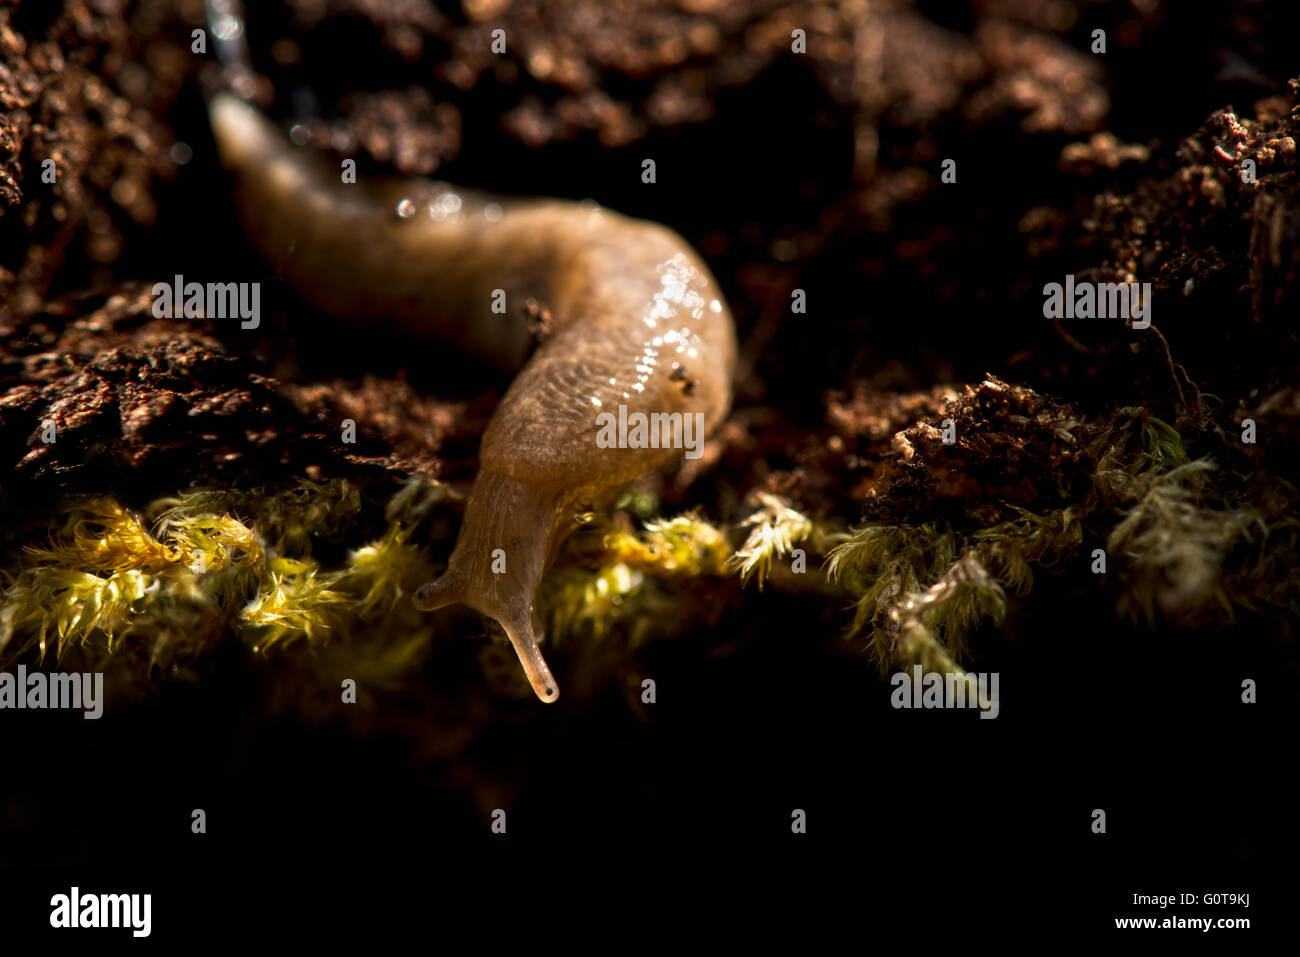 Netted or Grey Field Slug - Deroceras reticulatum. Image taken at Wilstone Reservoir, Hertfordshire, UK Stock Photo